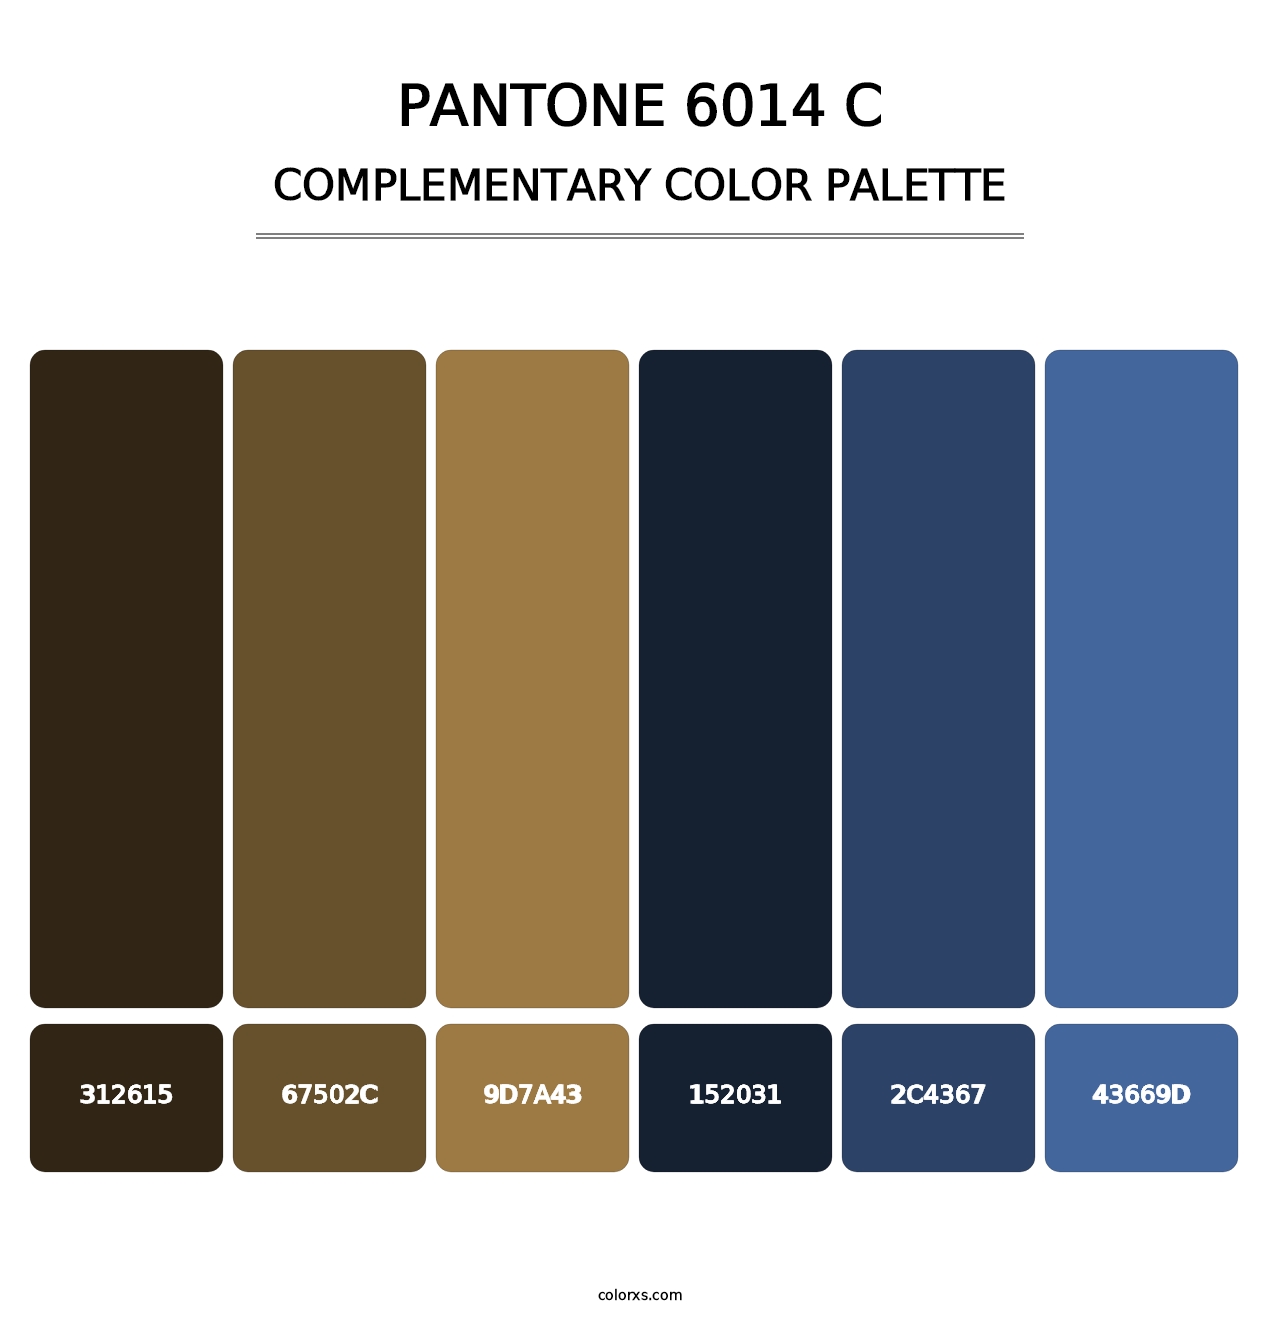 PANTONE 6014 C - Complementary Color Palette